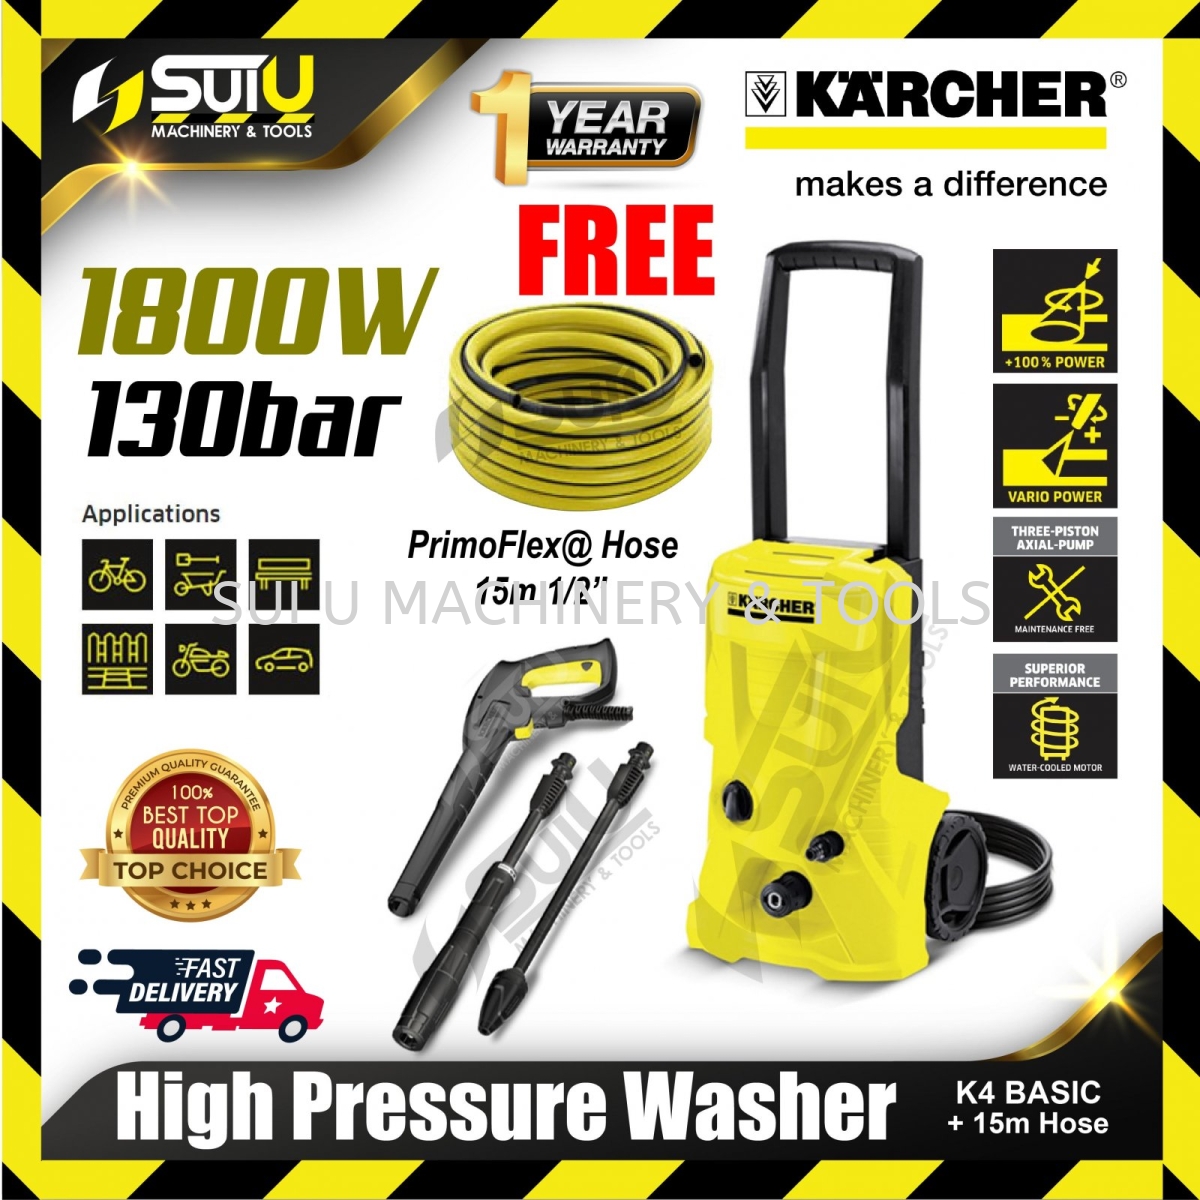 KARCHER K4 Basic 130bar High Pressure Washer 1800W FOC Hose 15m High  Pressure Washer Cleaning Equipment